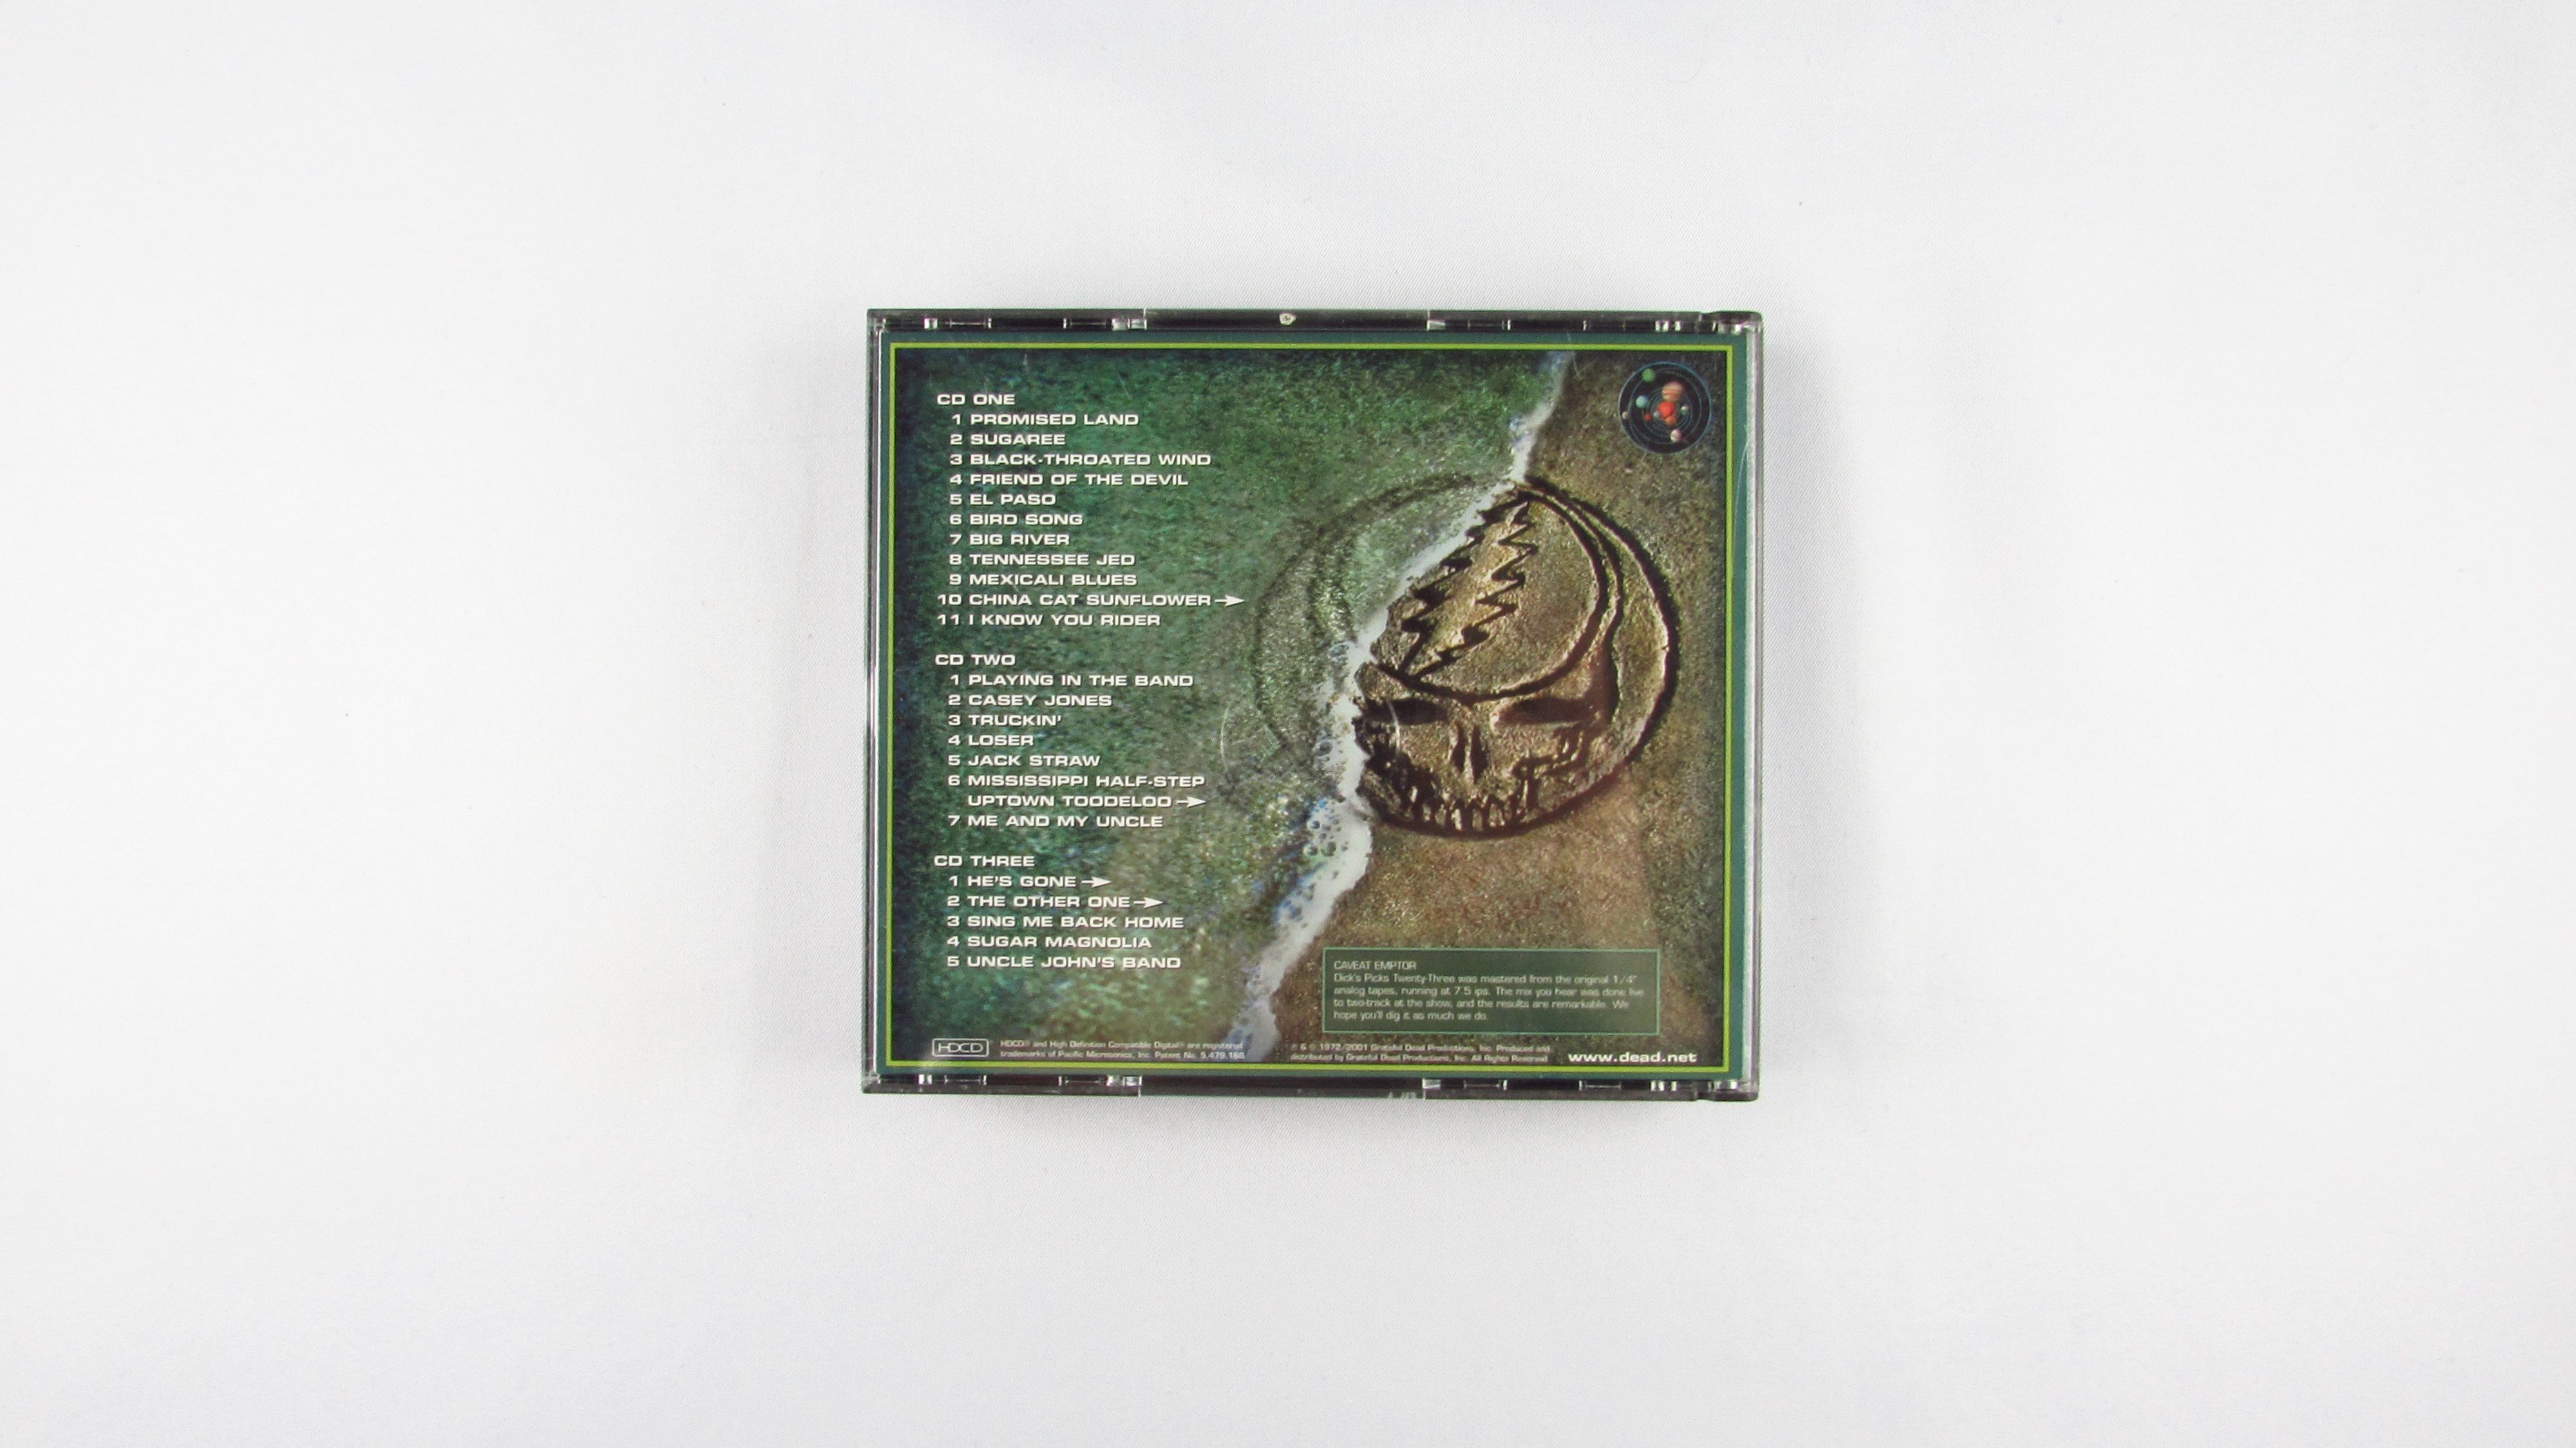 Grateful Dead - Dick's Picks Volume 23 - 3 Płyty CD